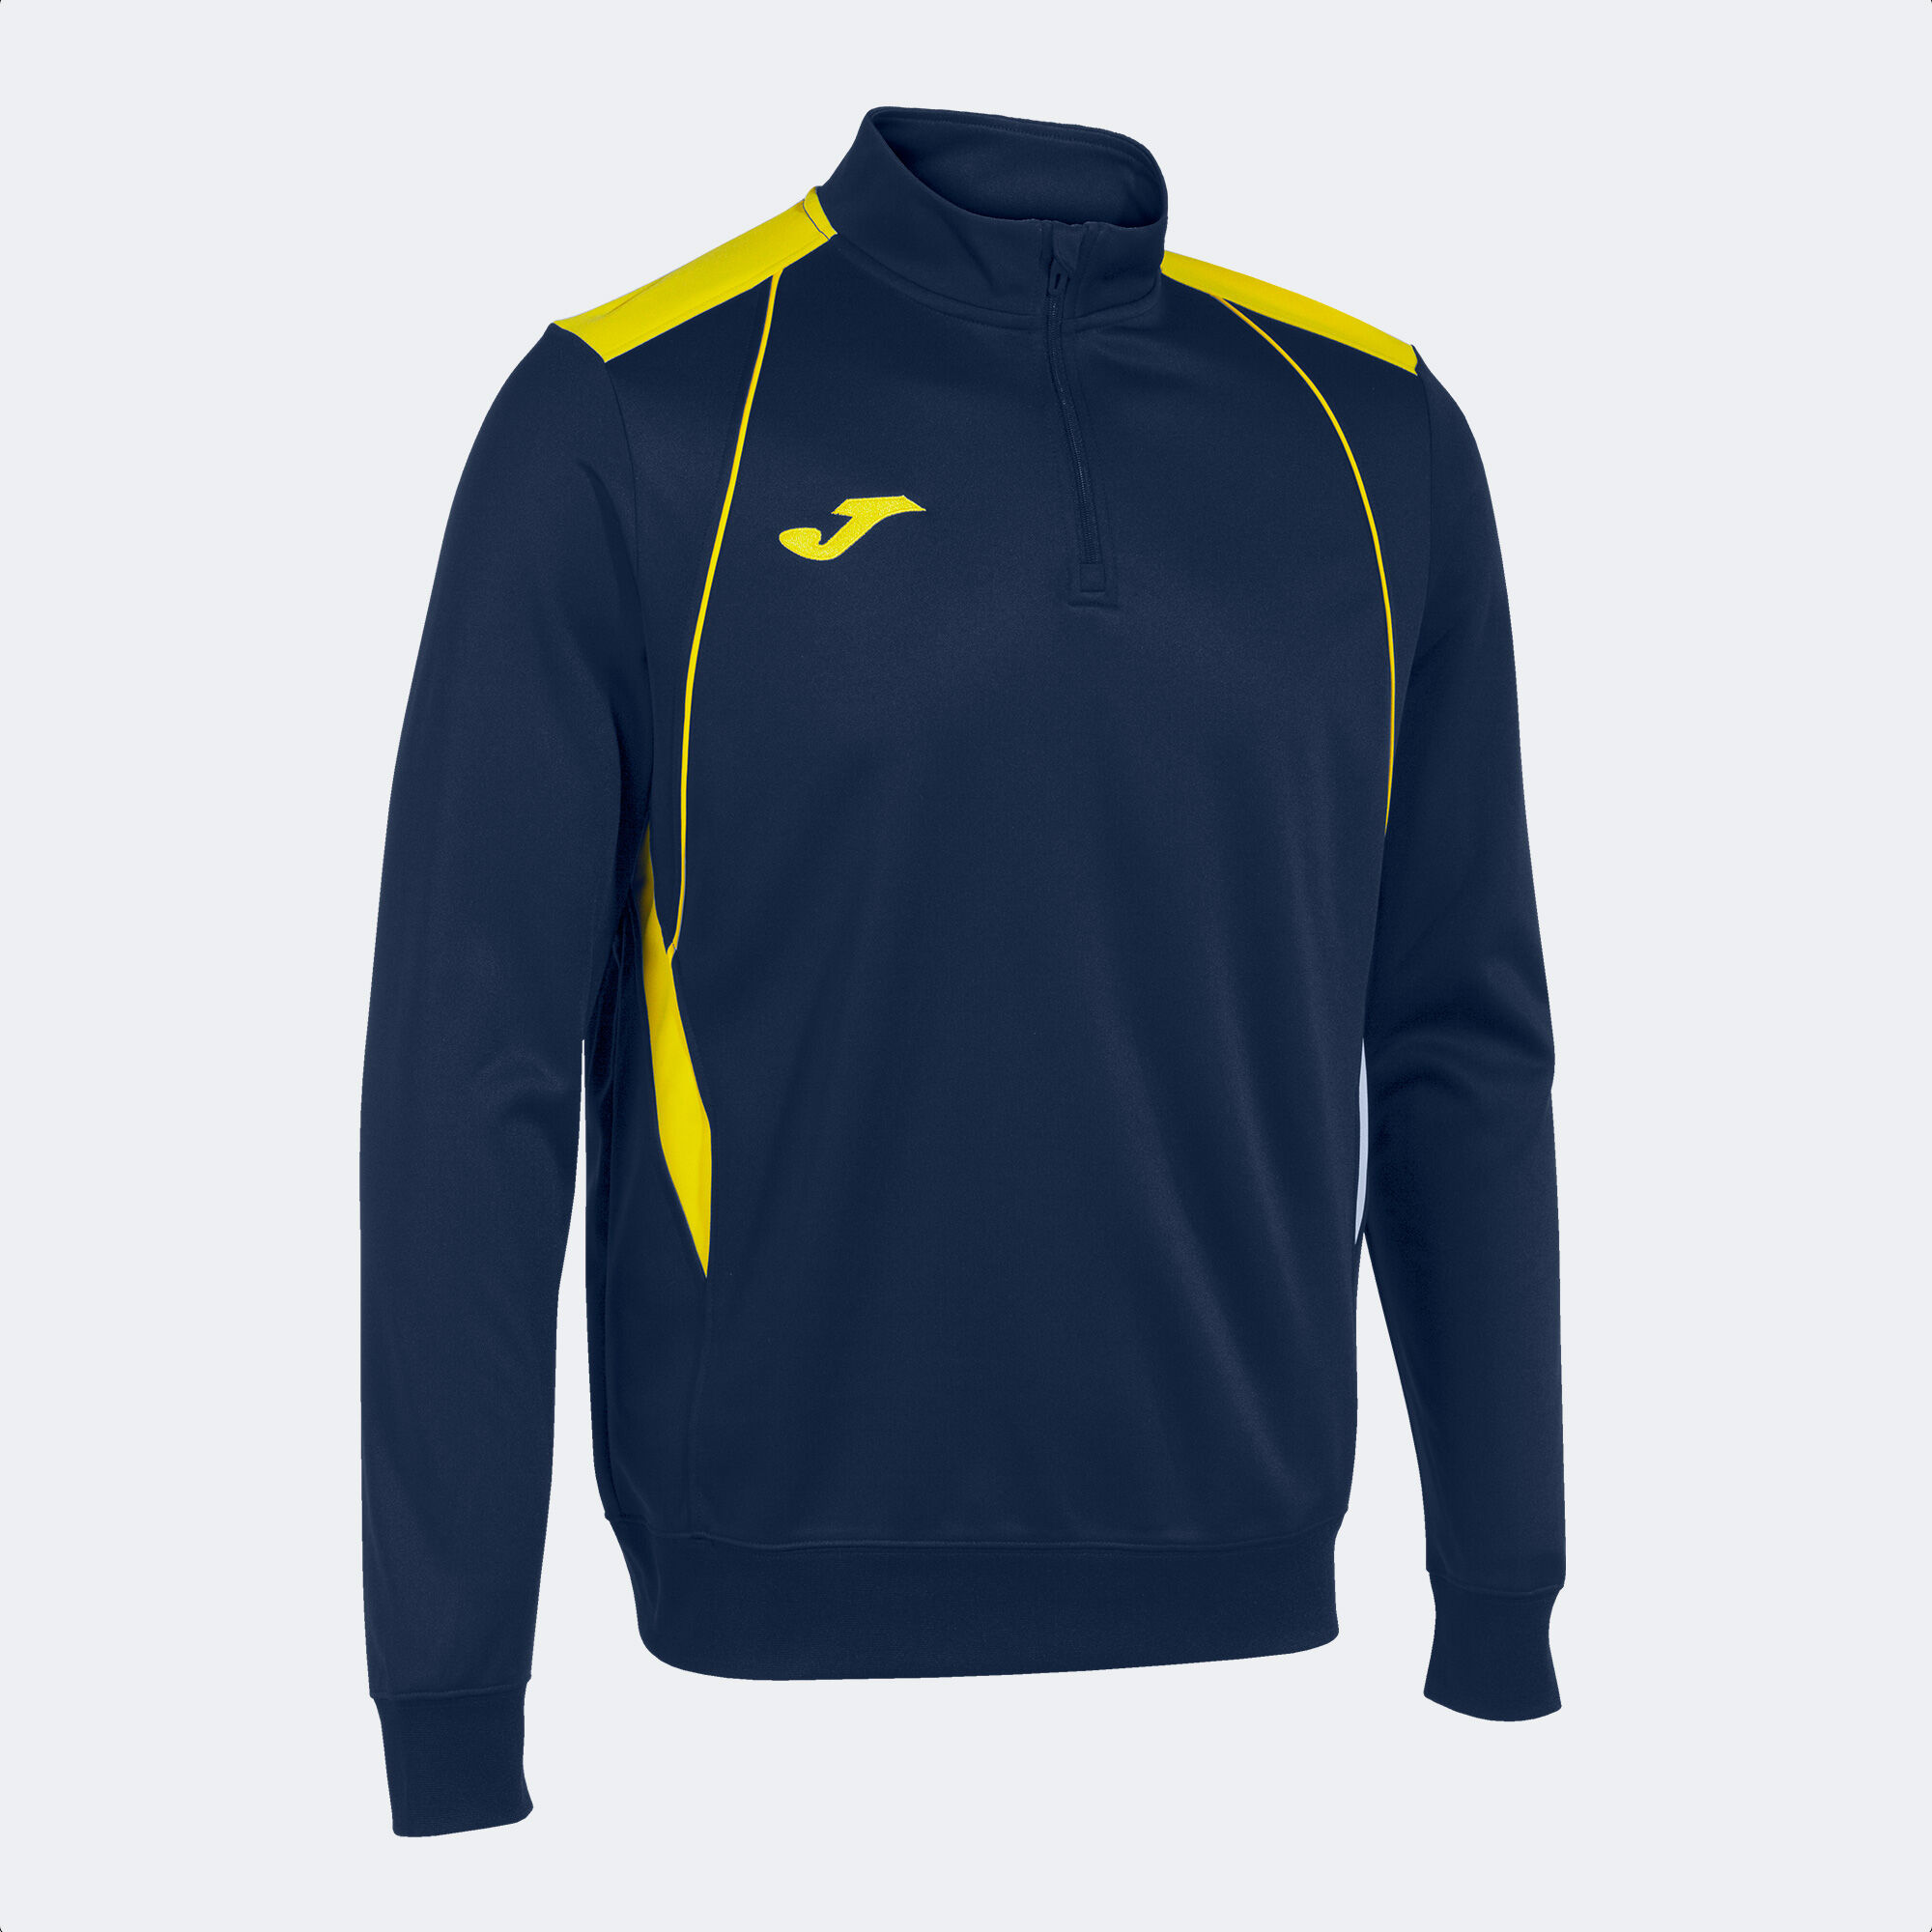 Sweatshirt man Championship VII navy blue yellow